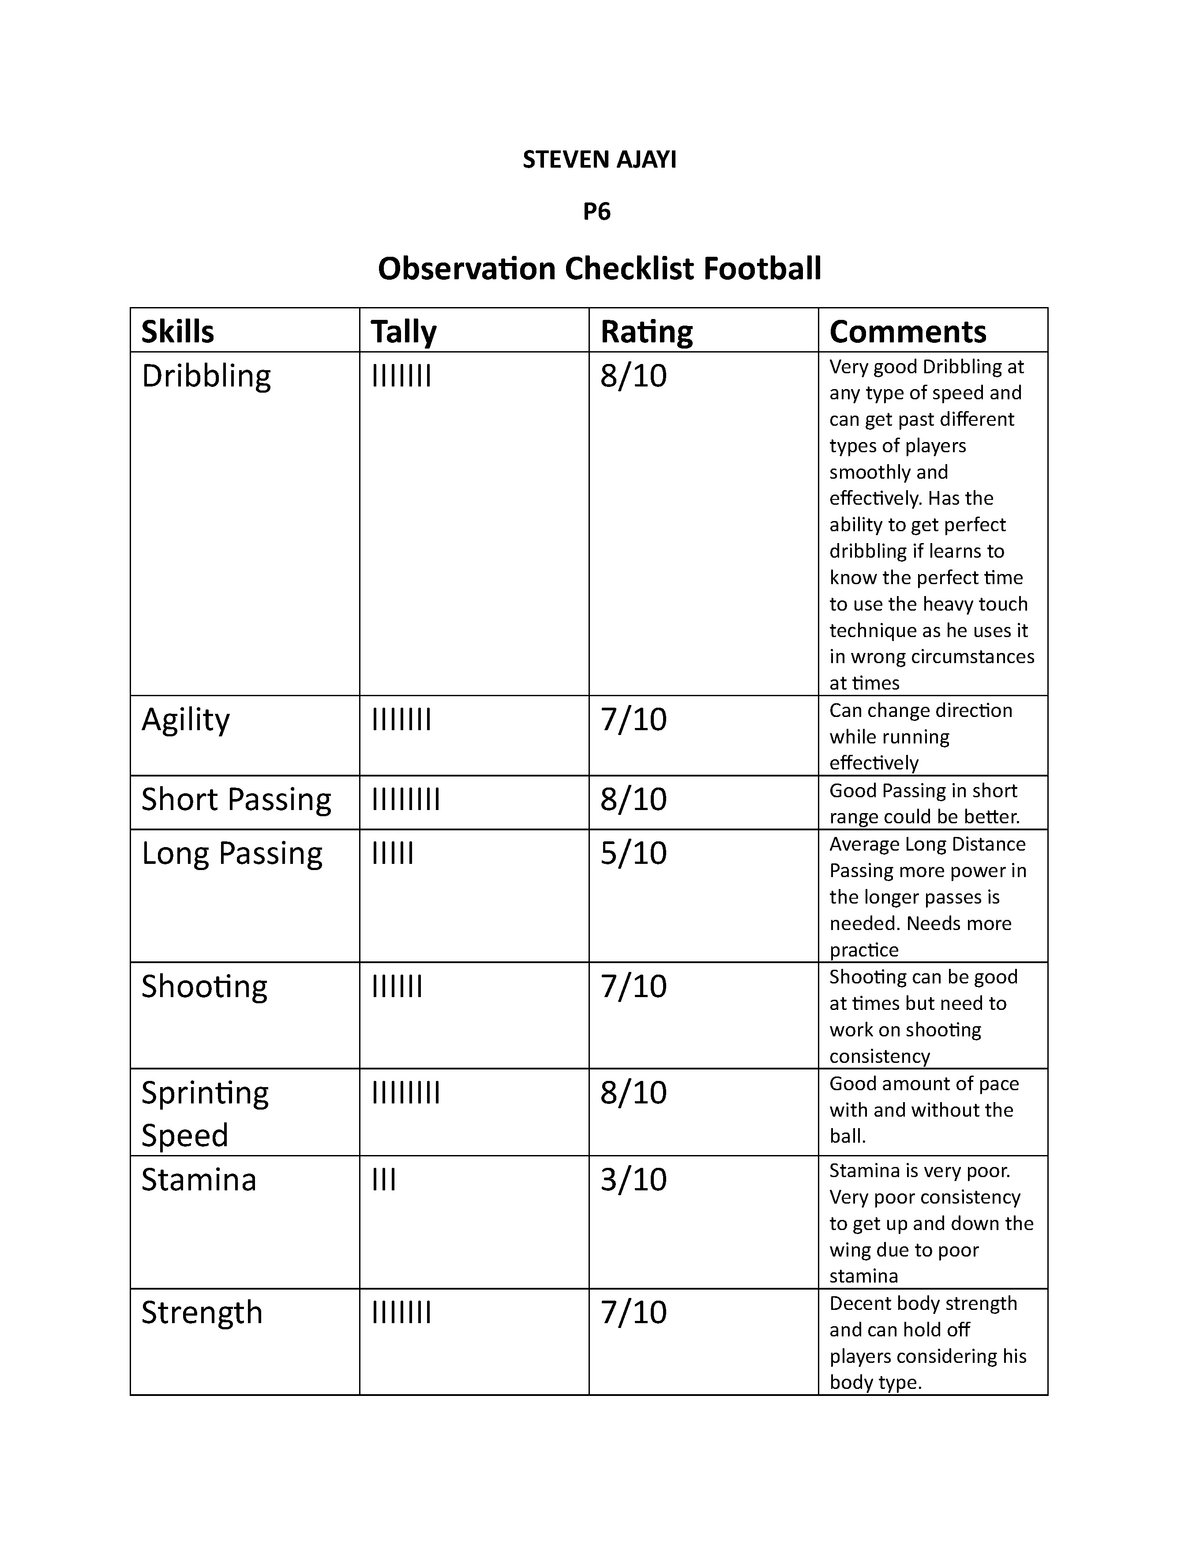 Observation Checklist Football P6 7 Achieved STEVEN AJAYI P